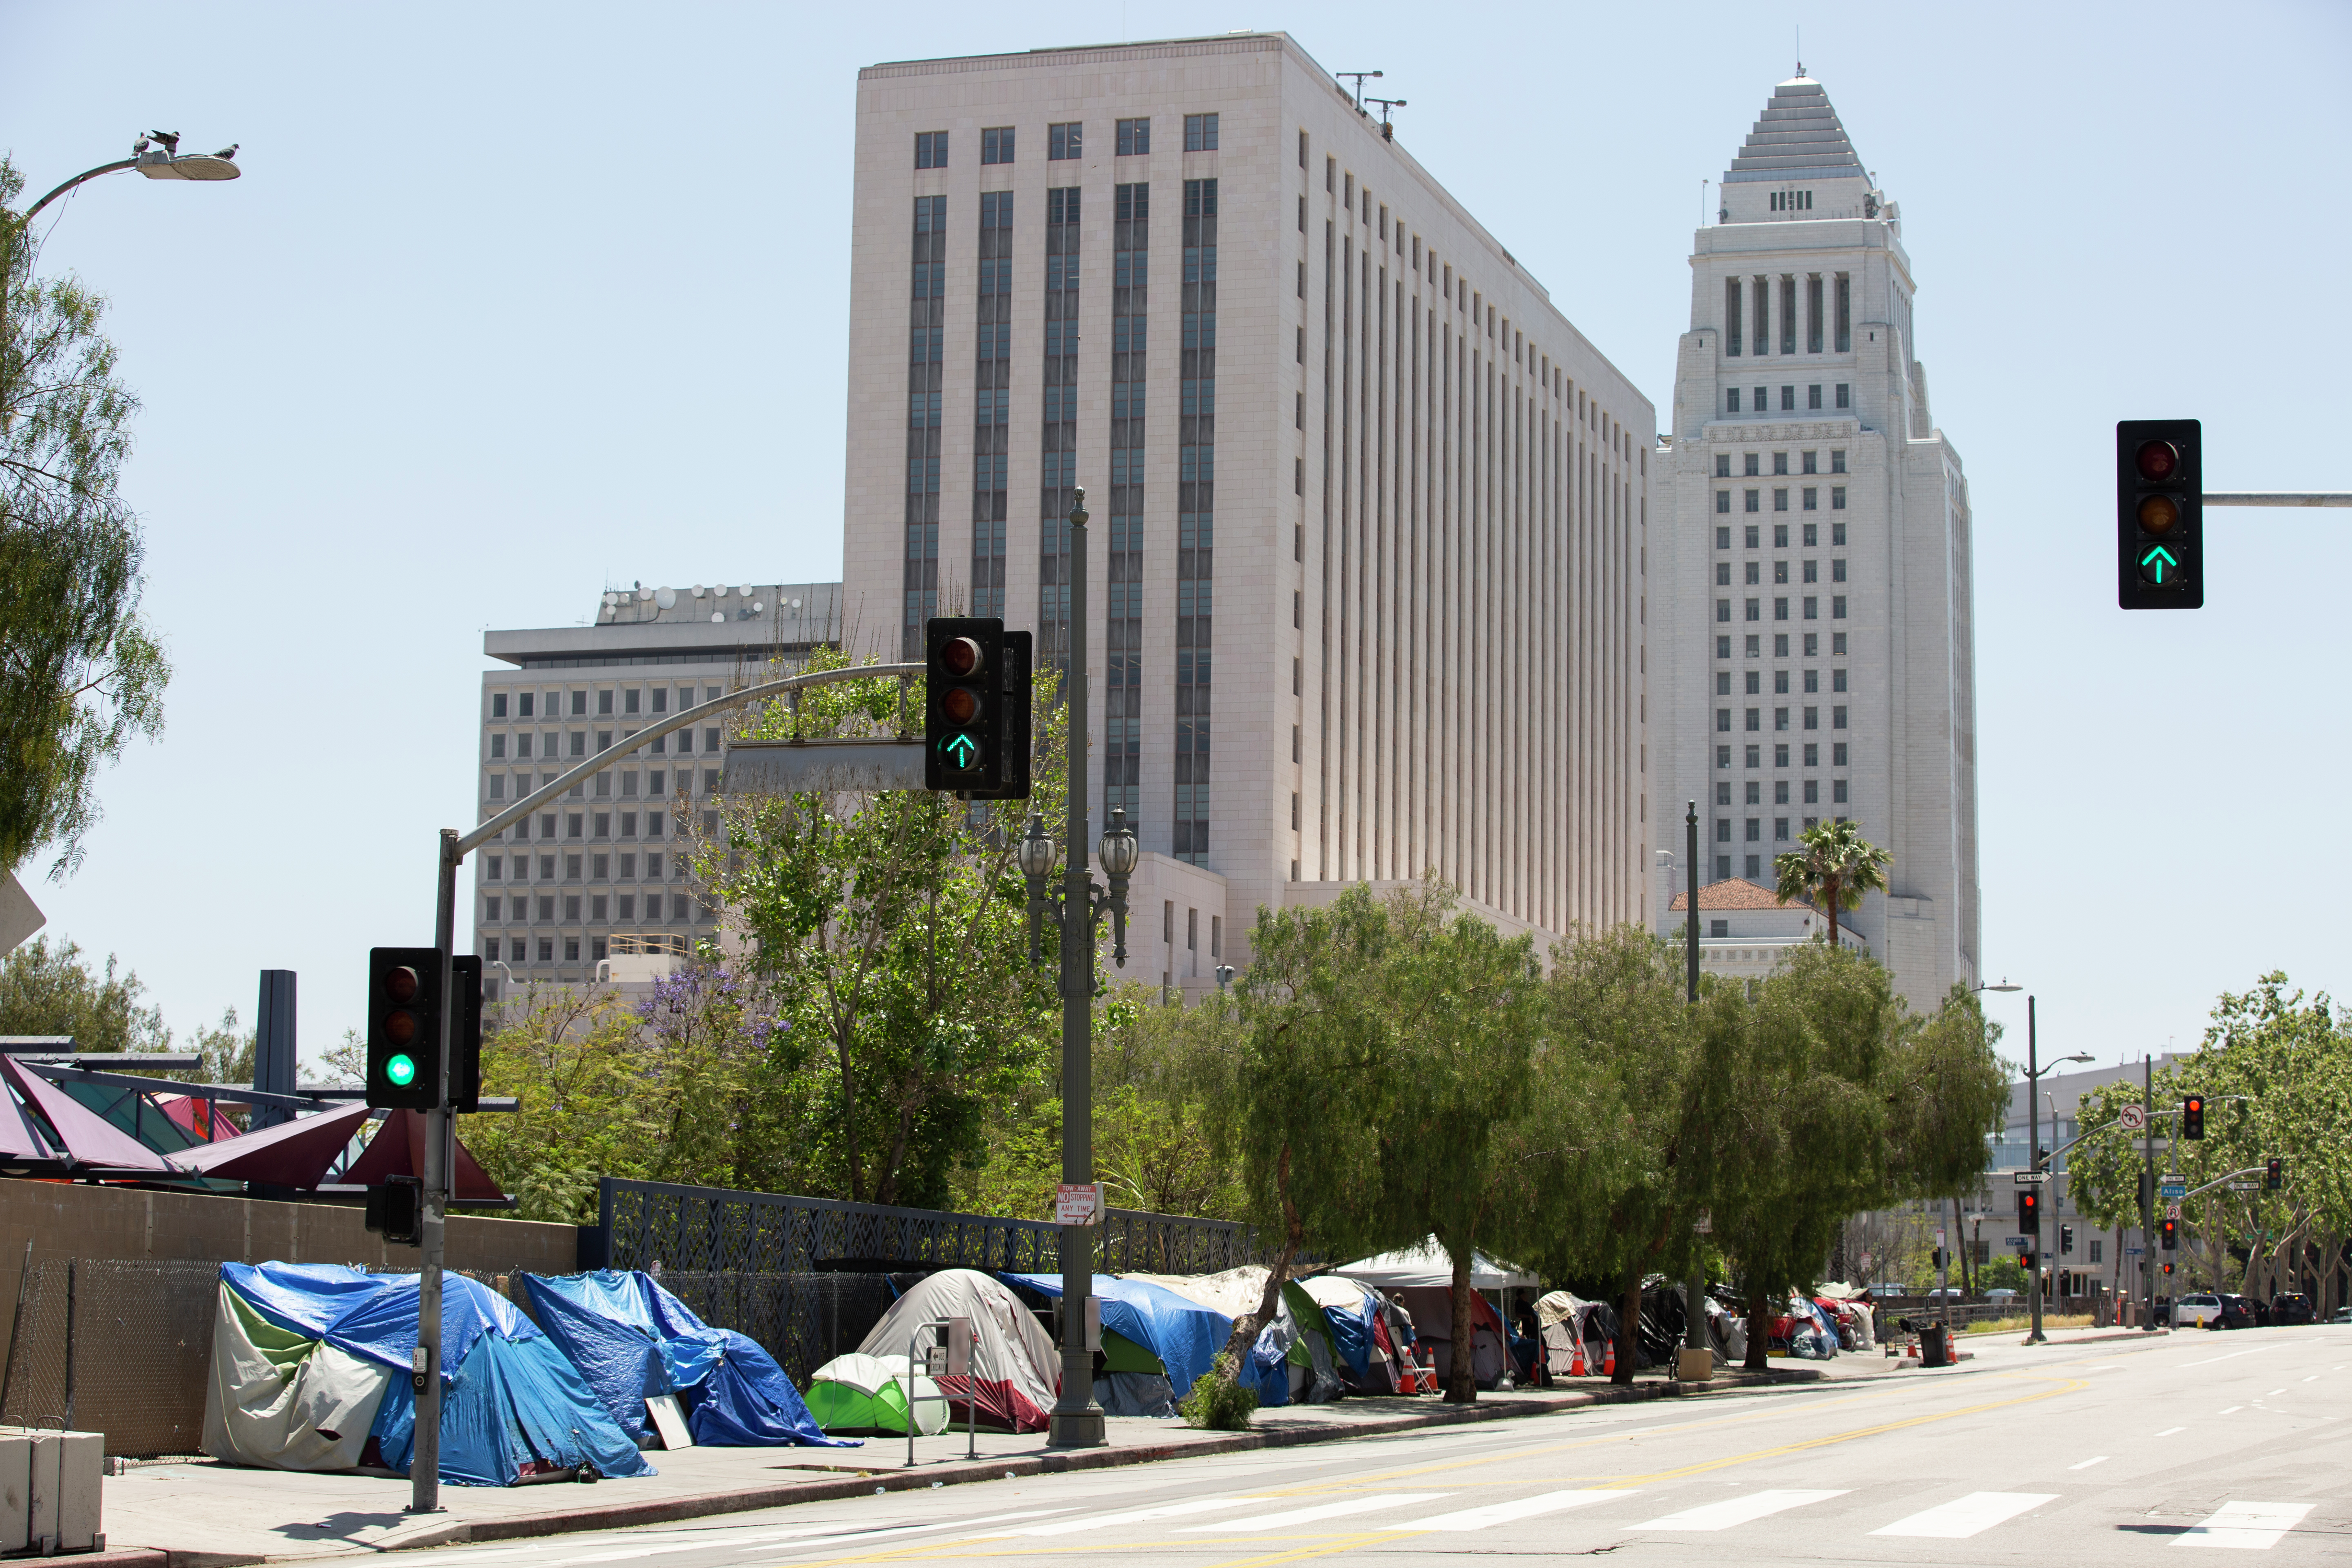 L.A. homeless service providers struggle financially